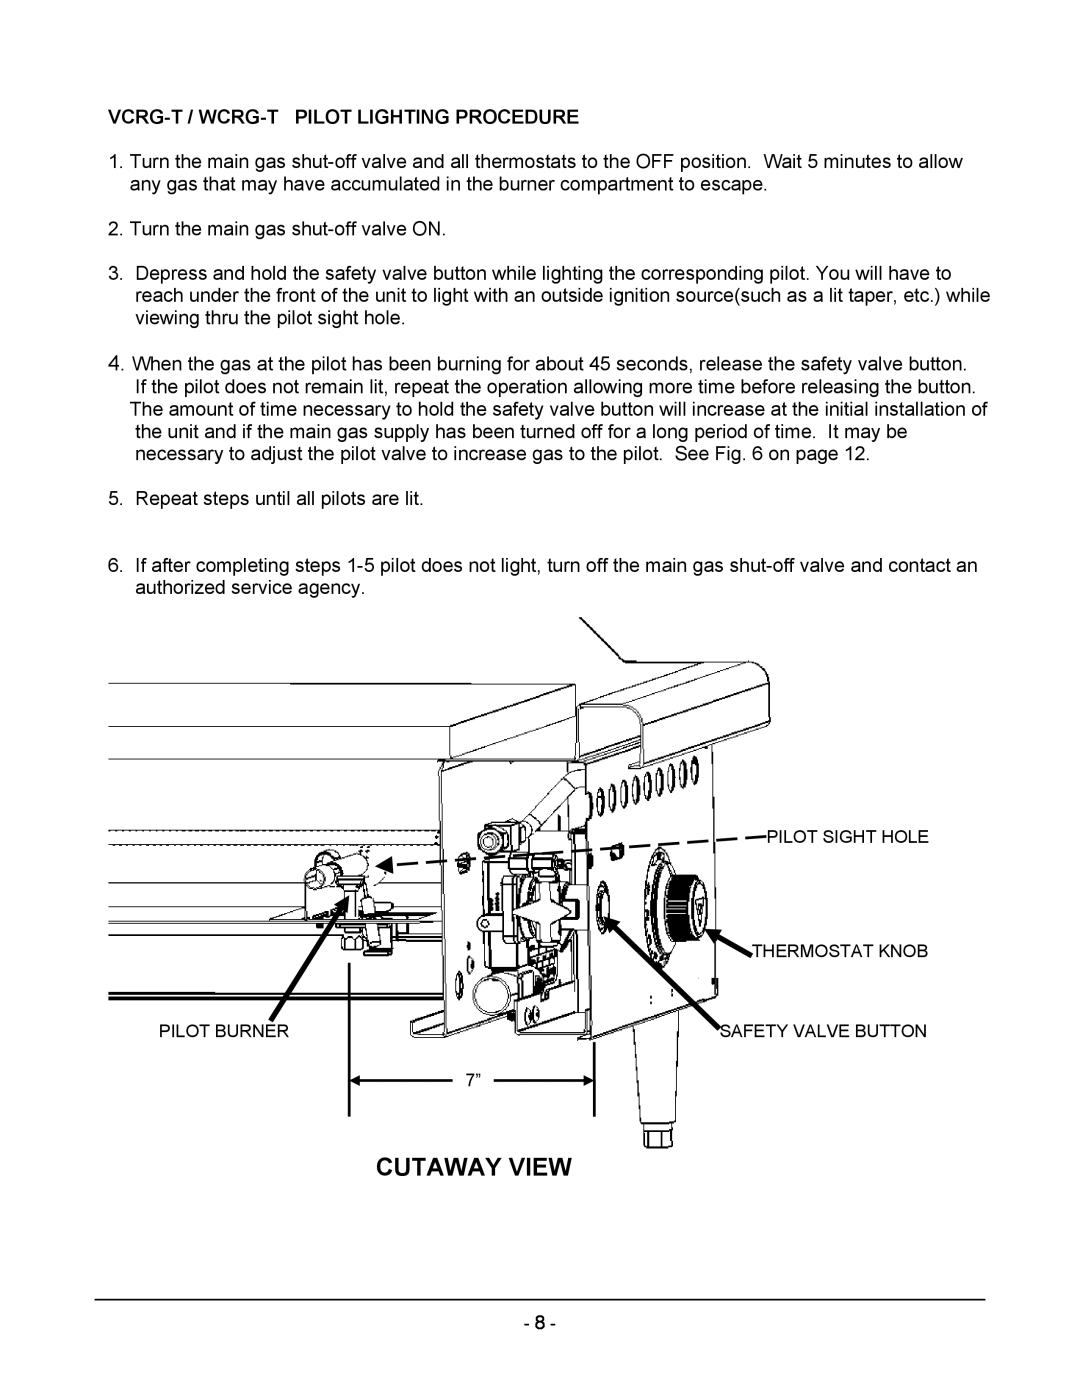 Vulcan-Hart VCRG24-T operation manual Cutaway View, Vcrg-T / Wcrg-T Pilot Lighting Procedure 